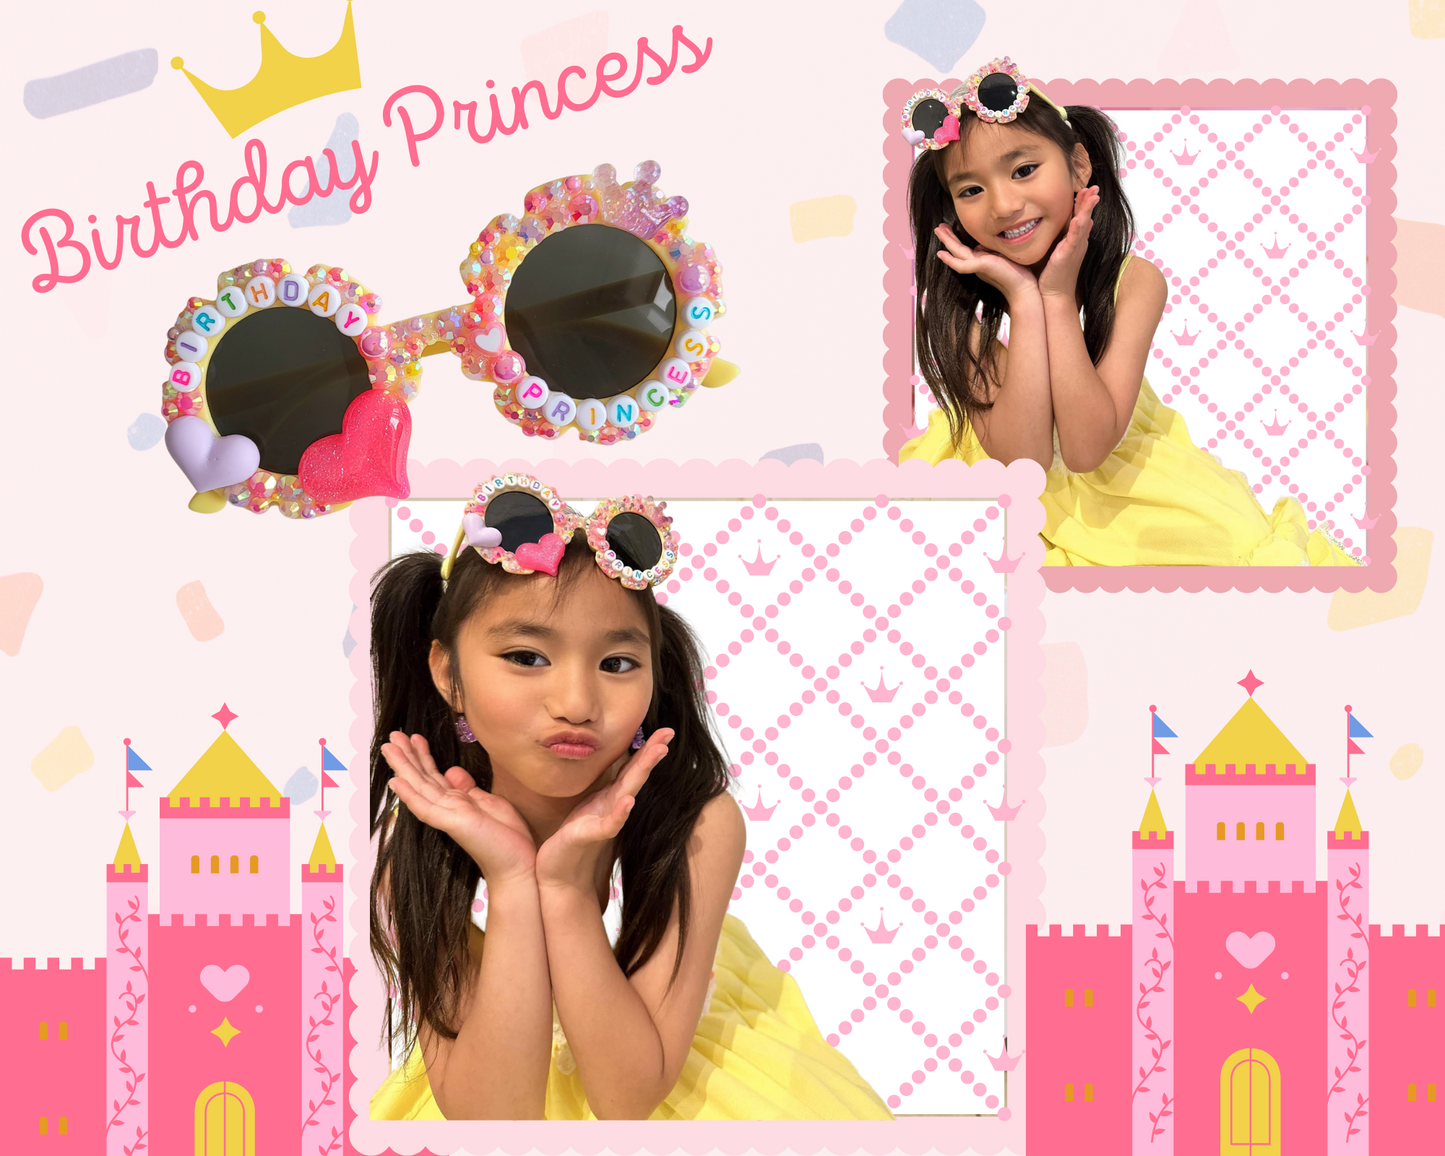 Birthday Sunny - Princess